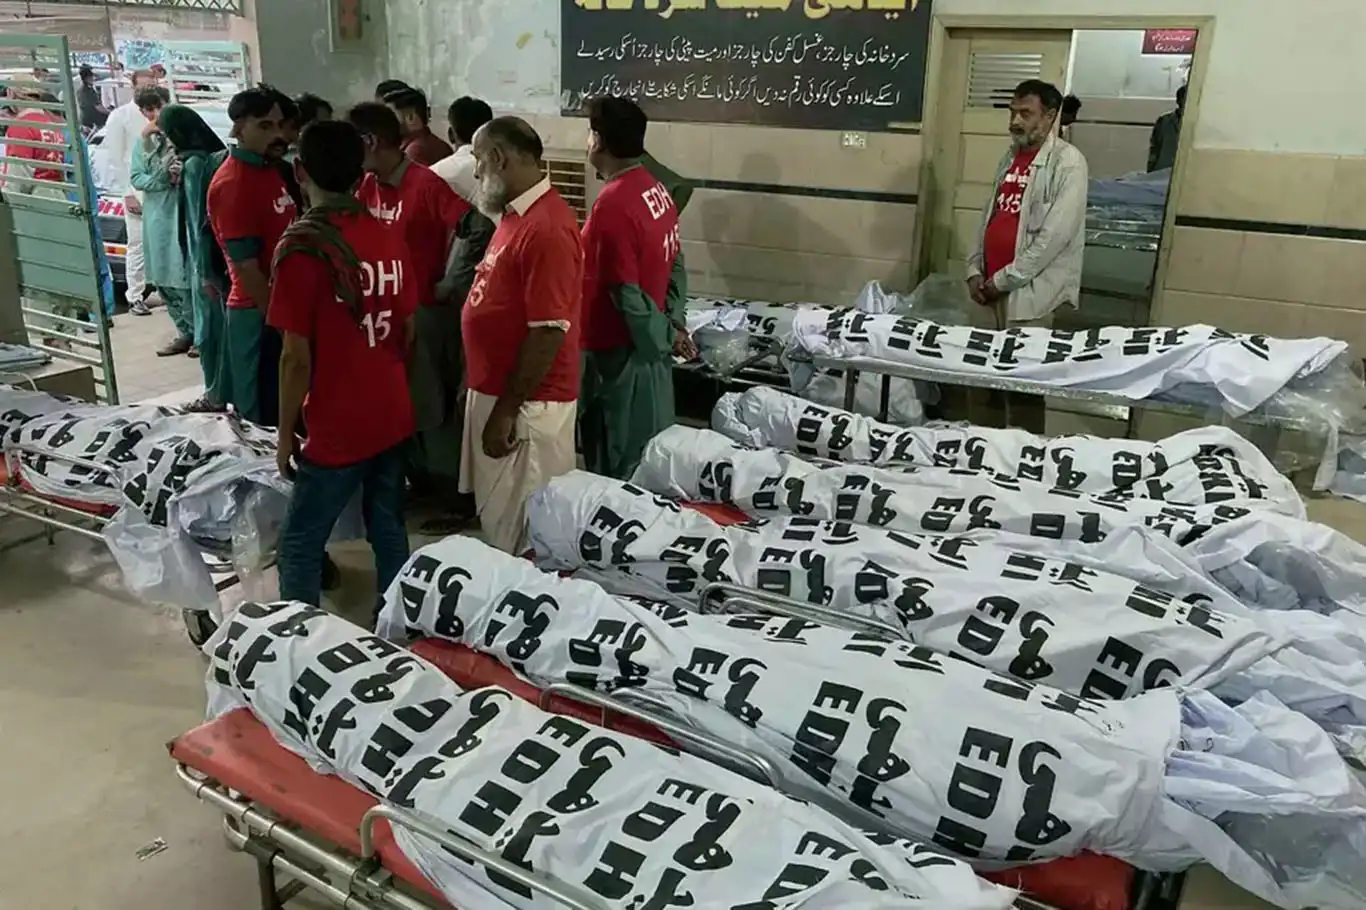 Bus crash in Baluchistan claims lives of 17 Pakistani pilgrims during Eid journey